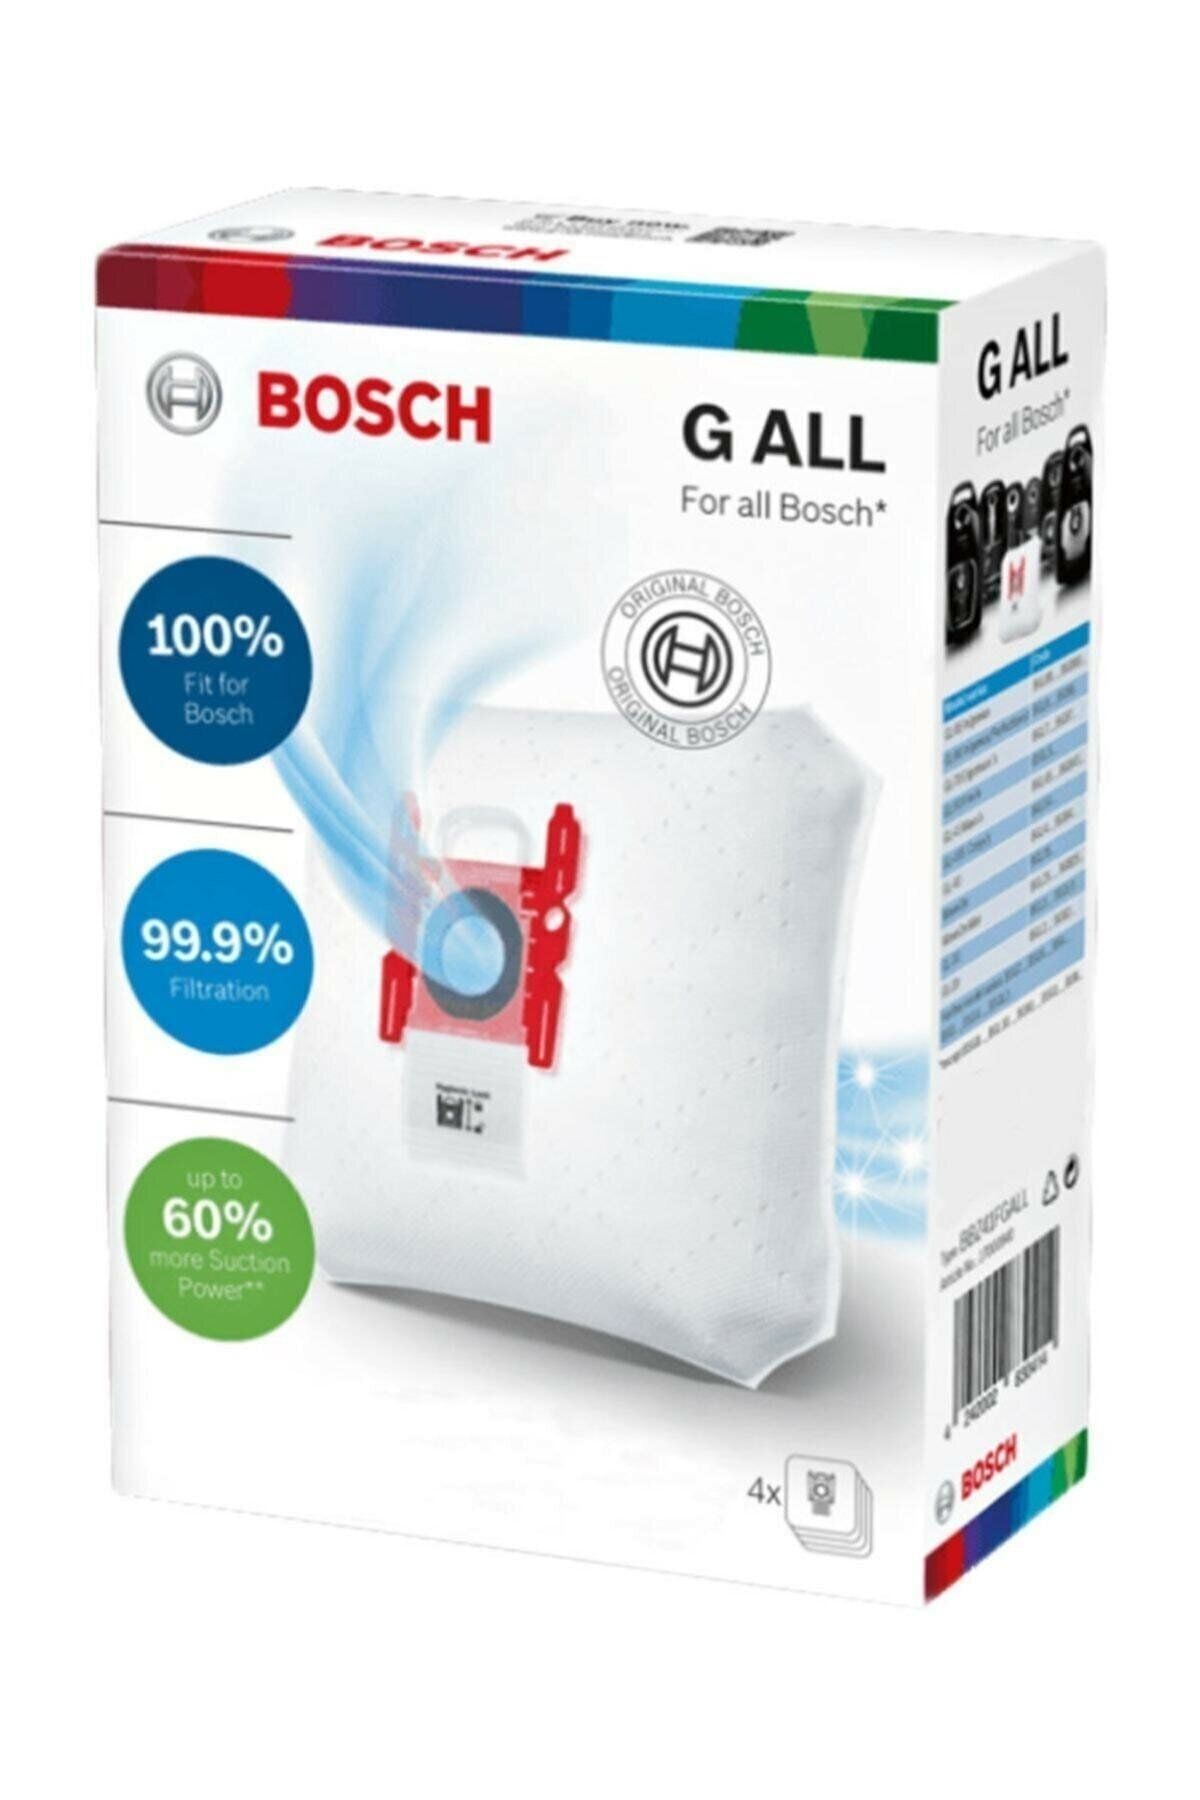 Bosch Bgl 81030 Ingenius Süpürge G All Toz Torbası 4 Adet